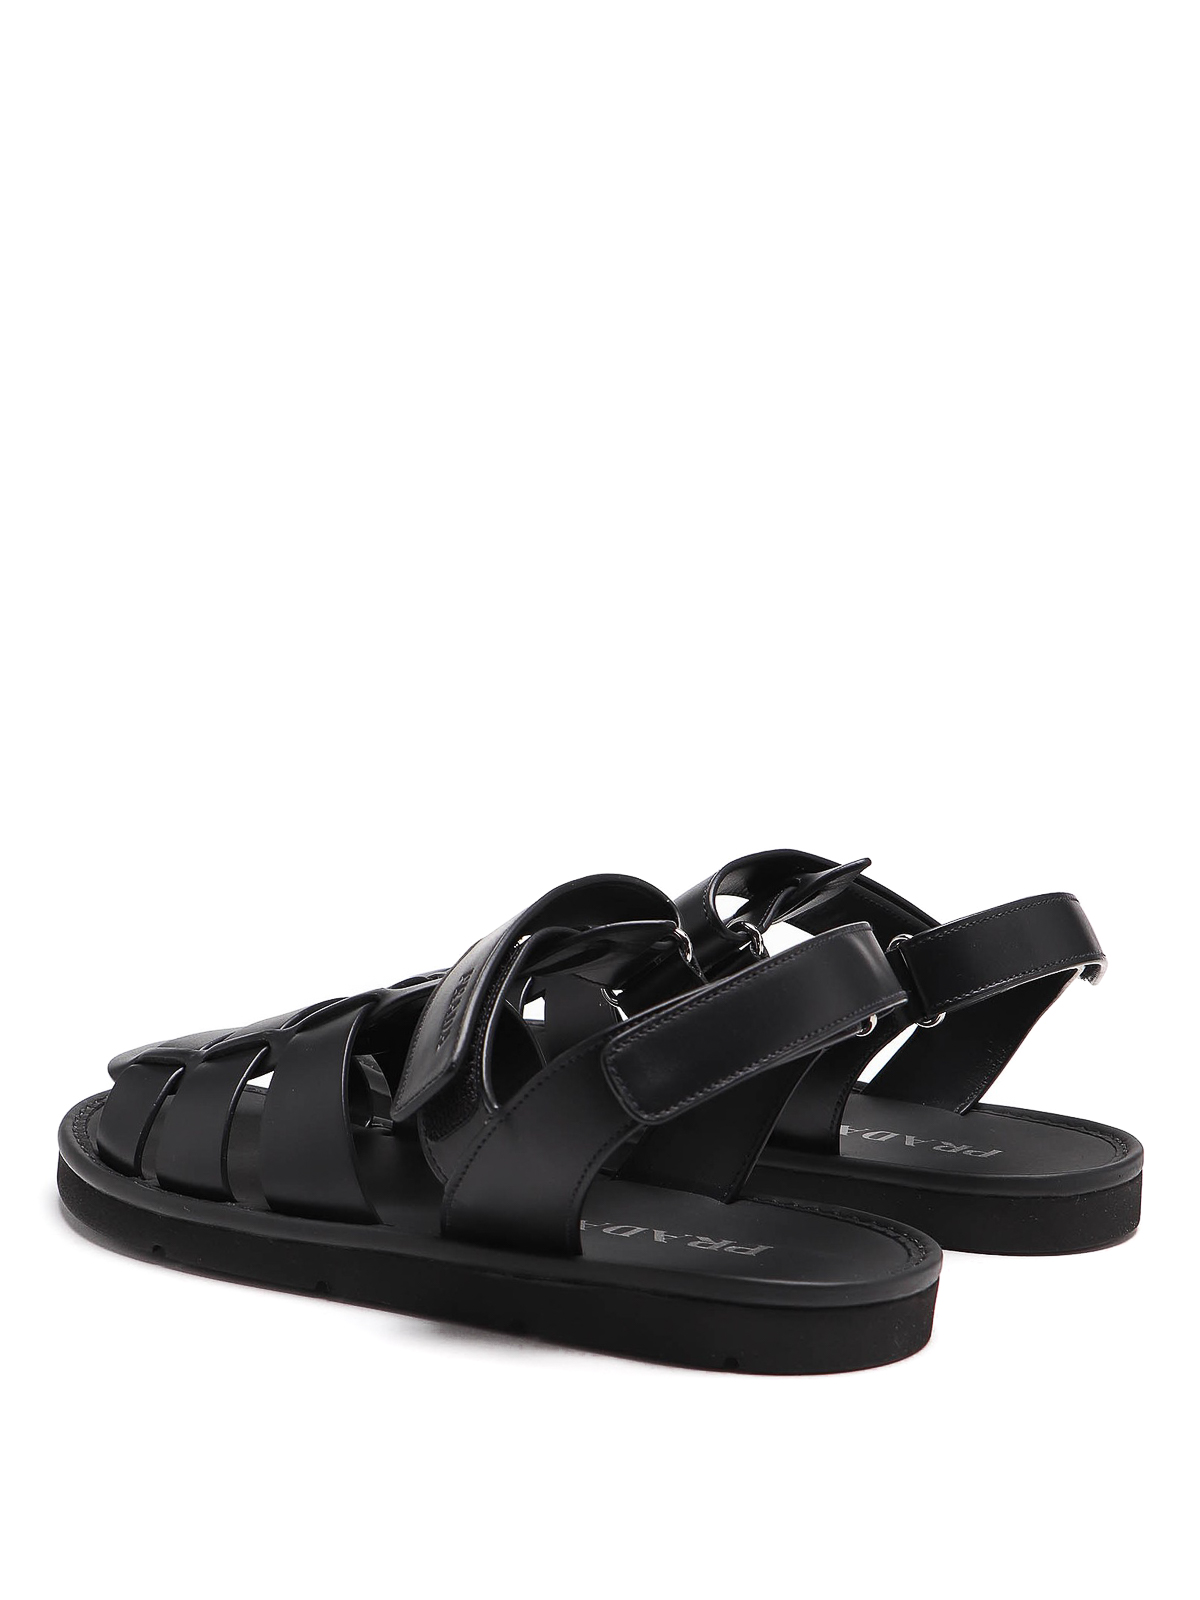 Sandals Prada - Fisherman sandals - 2X3052A21F0002 | Shop online 